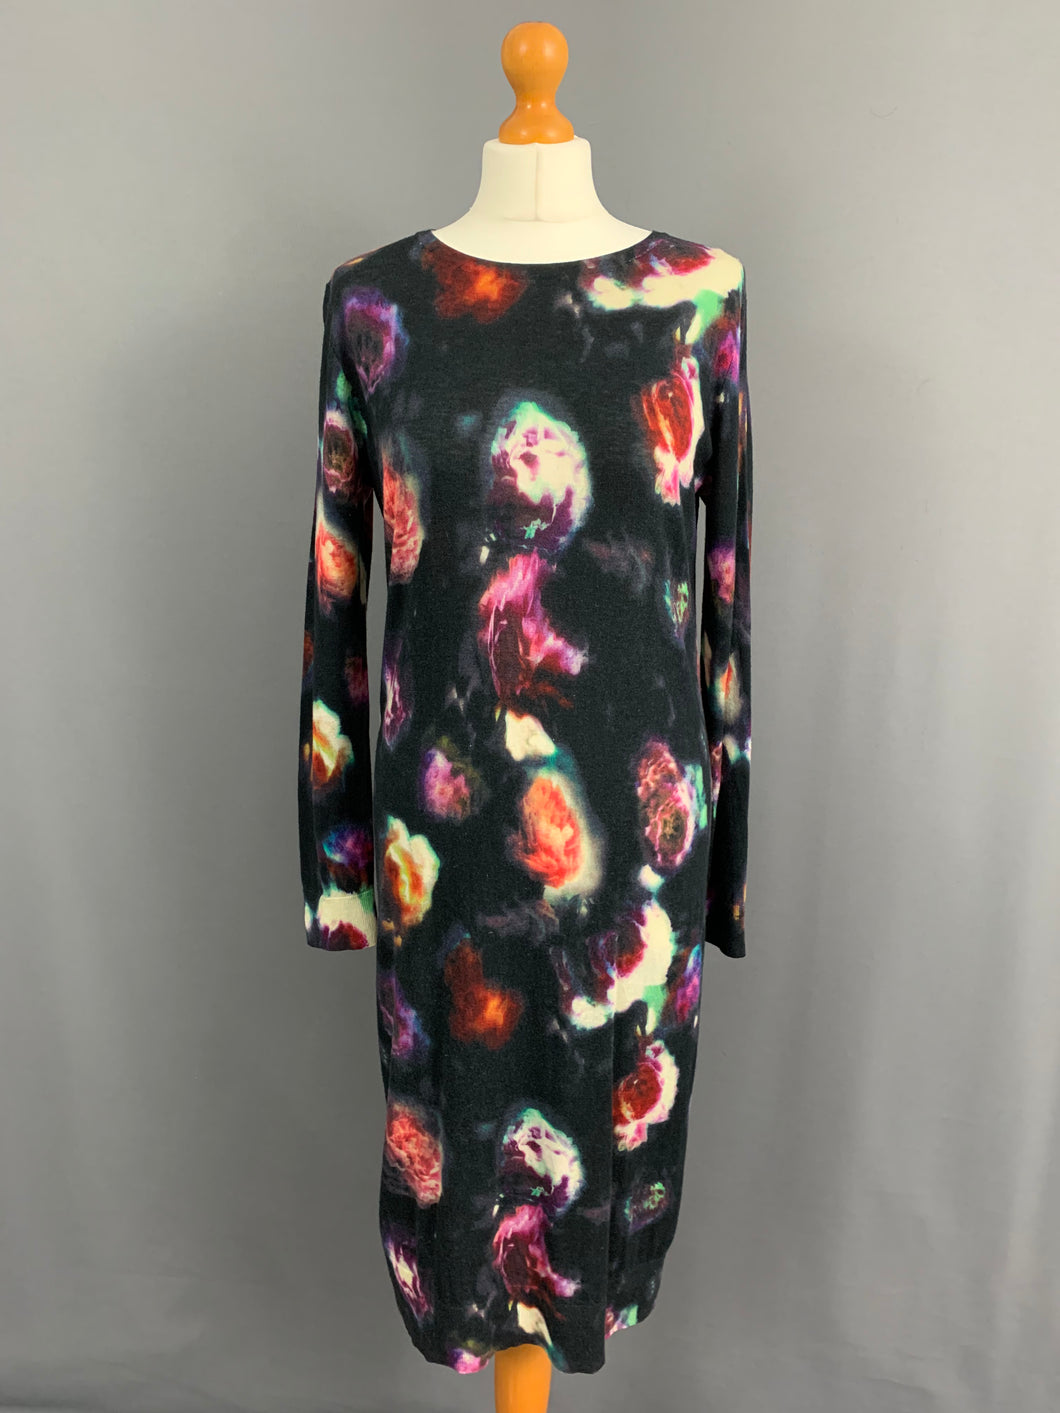 PAUL SMITH JERSEY DRESS - Wool & Silk - Women's Size M Medium IT 44 - UK 12